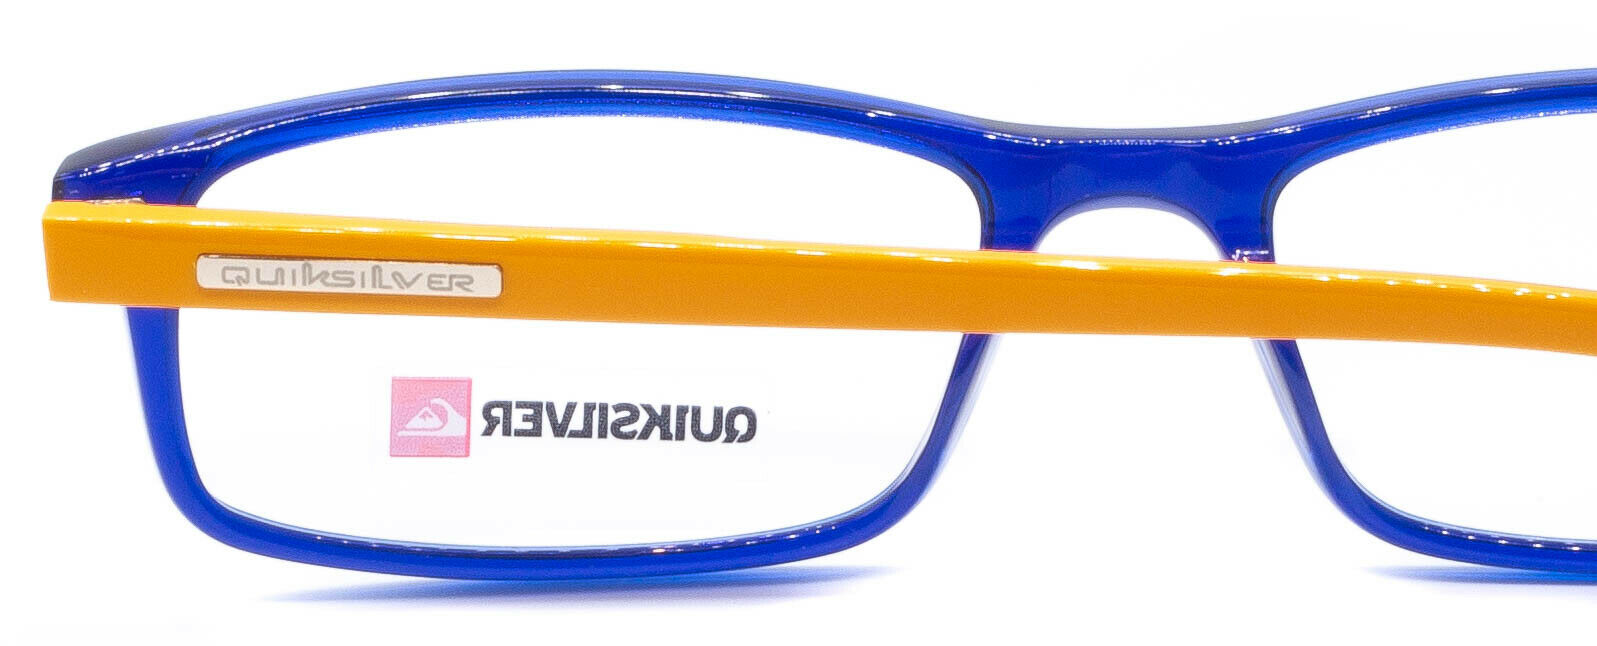 QUIKSILVER EQYEG00004/BLU FORTUNATE RX Optical FRAMES Glasses Eyewear Eyeglasses